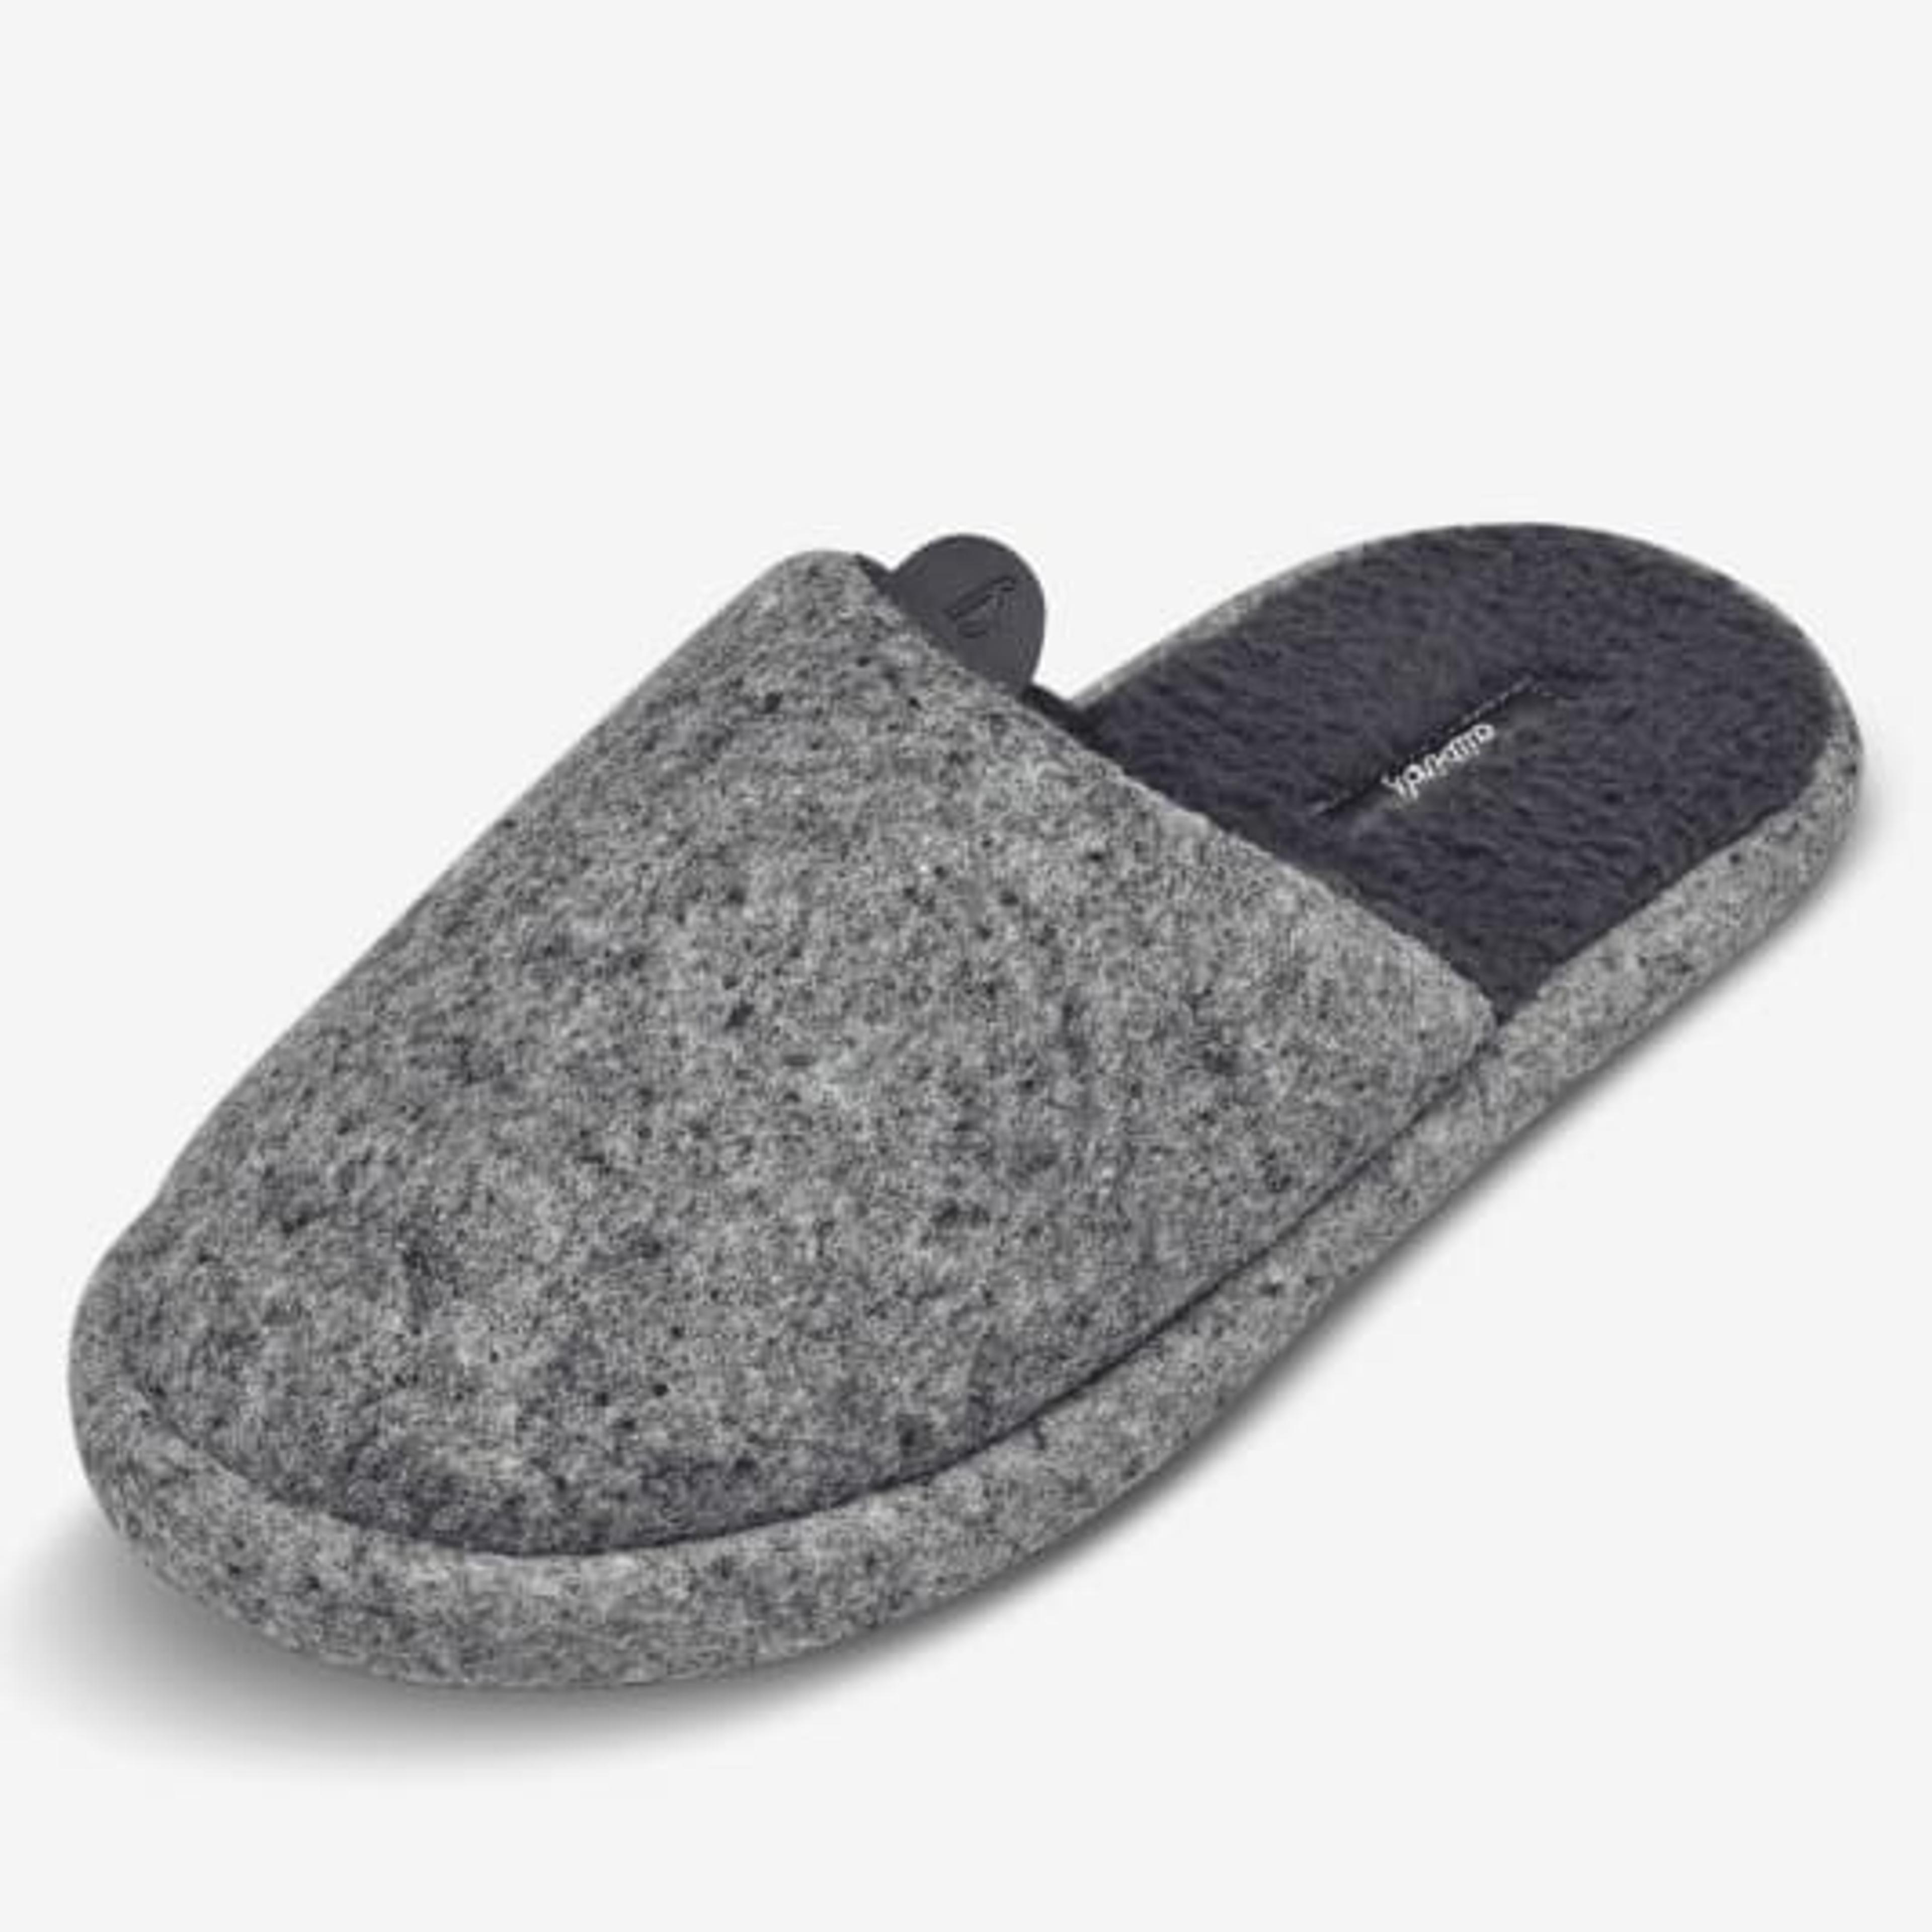 Wool Dwellers - Heathered Grey (Grey Sole) | Allbirds Wool Slippers, Sustainably Made